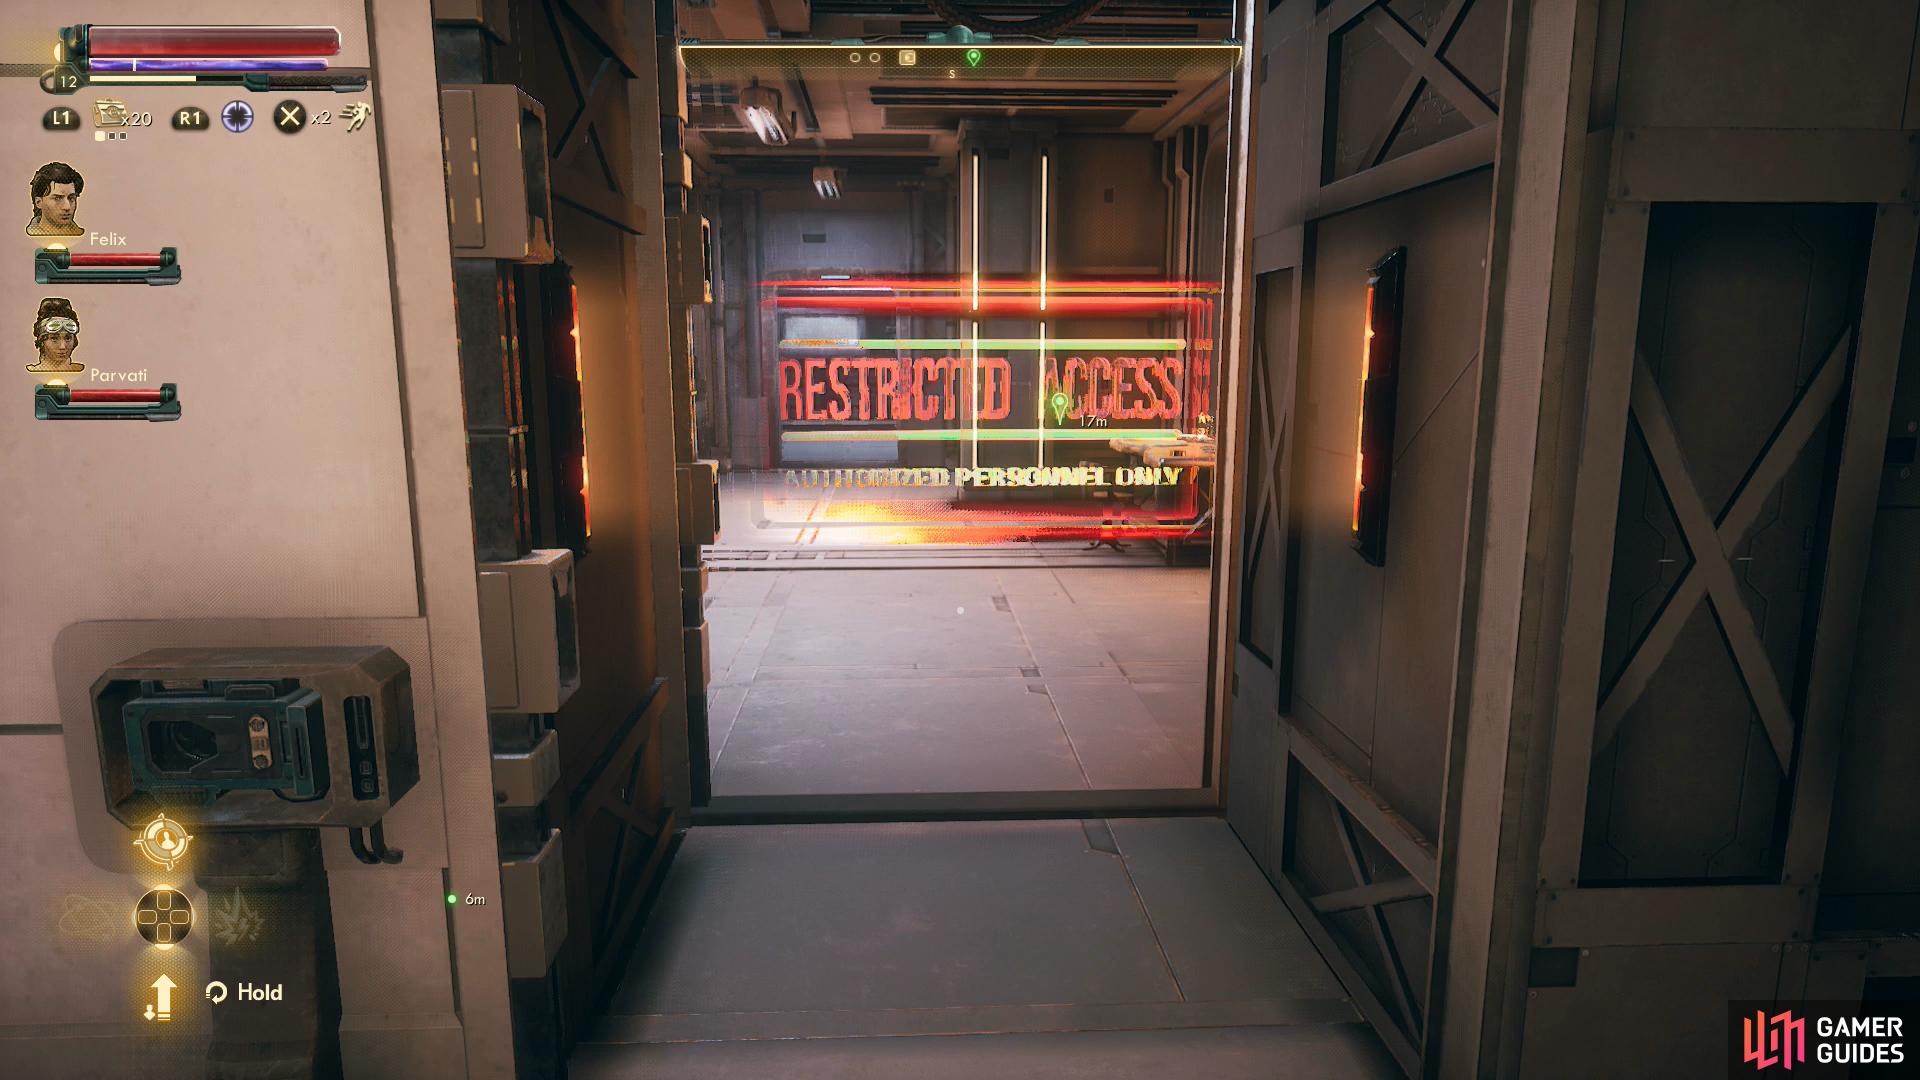 On Groundbreaker, enter a restricted area